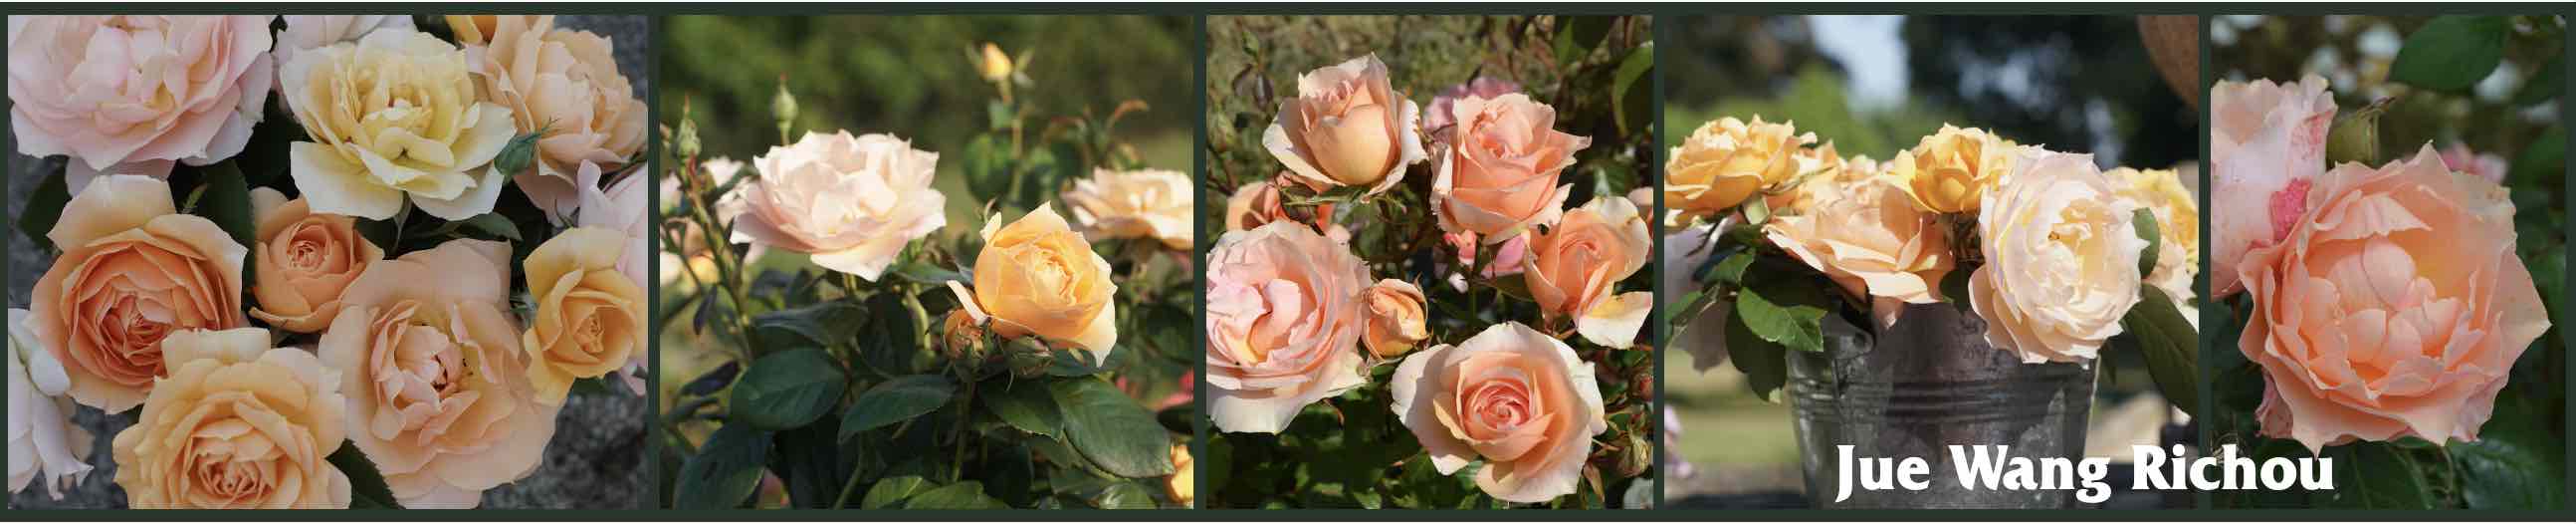 Rose Jue Wang-Richou - Donner son nom a une rose - Guillot®